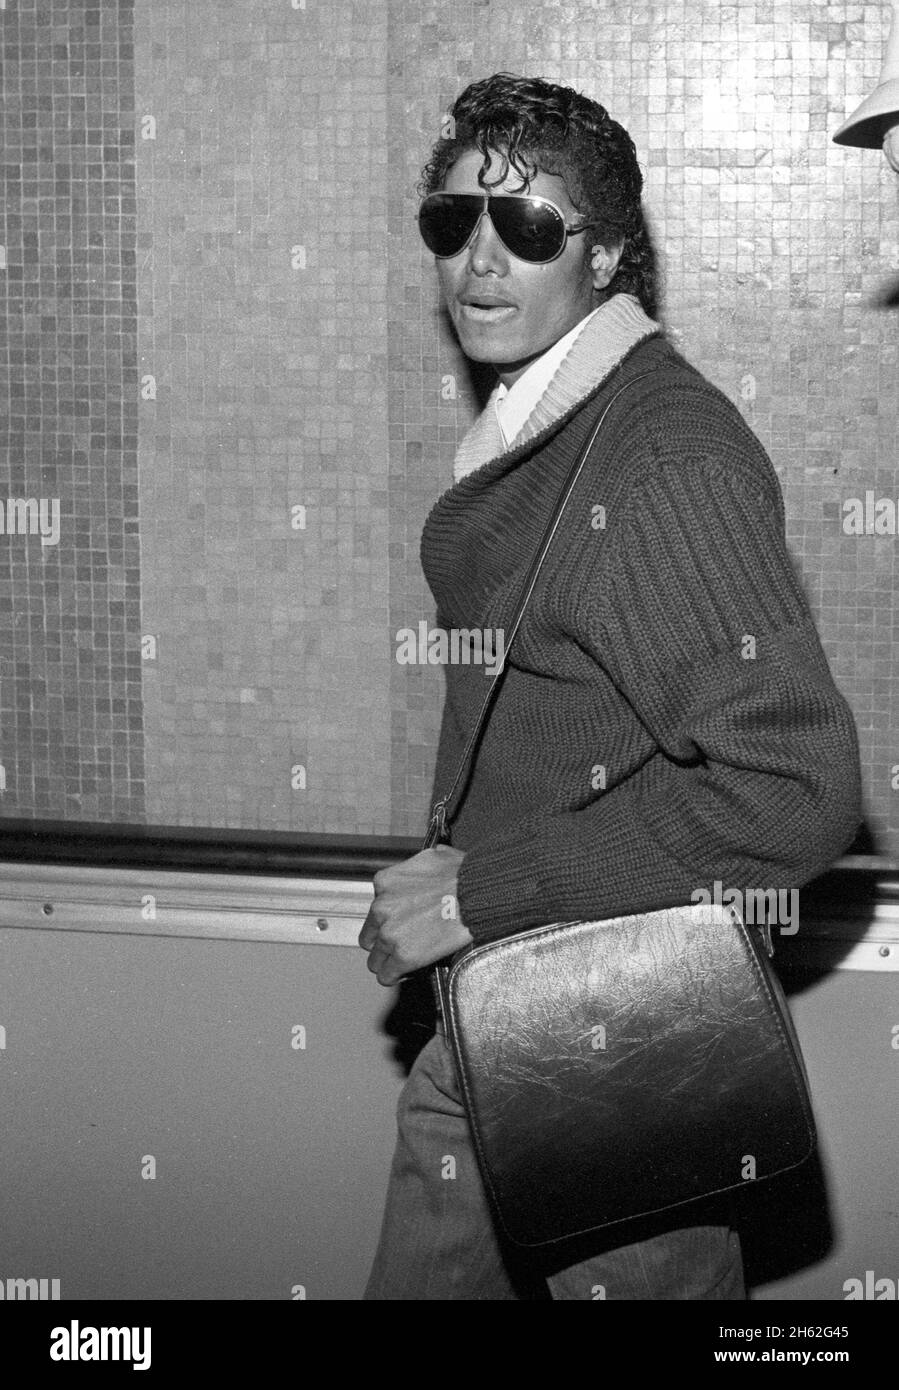 Michael Jackson Circa 1980's Credit: Ralph Dominguez/MediaPunch Stock Photo